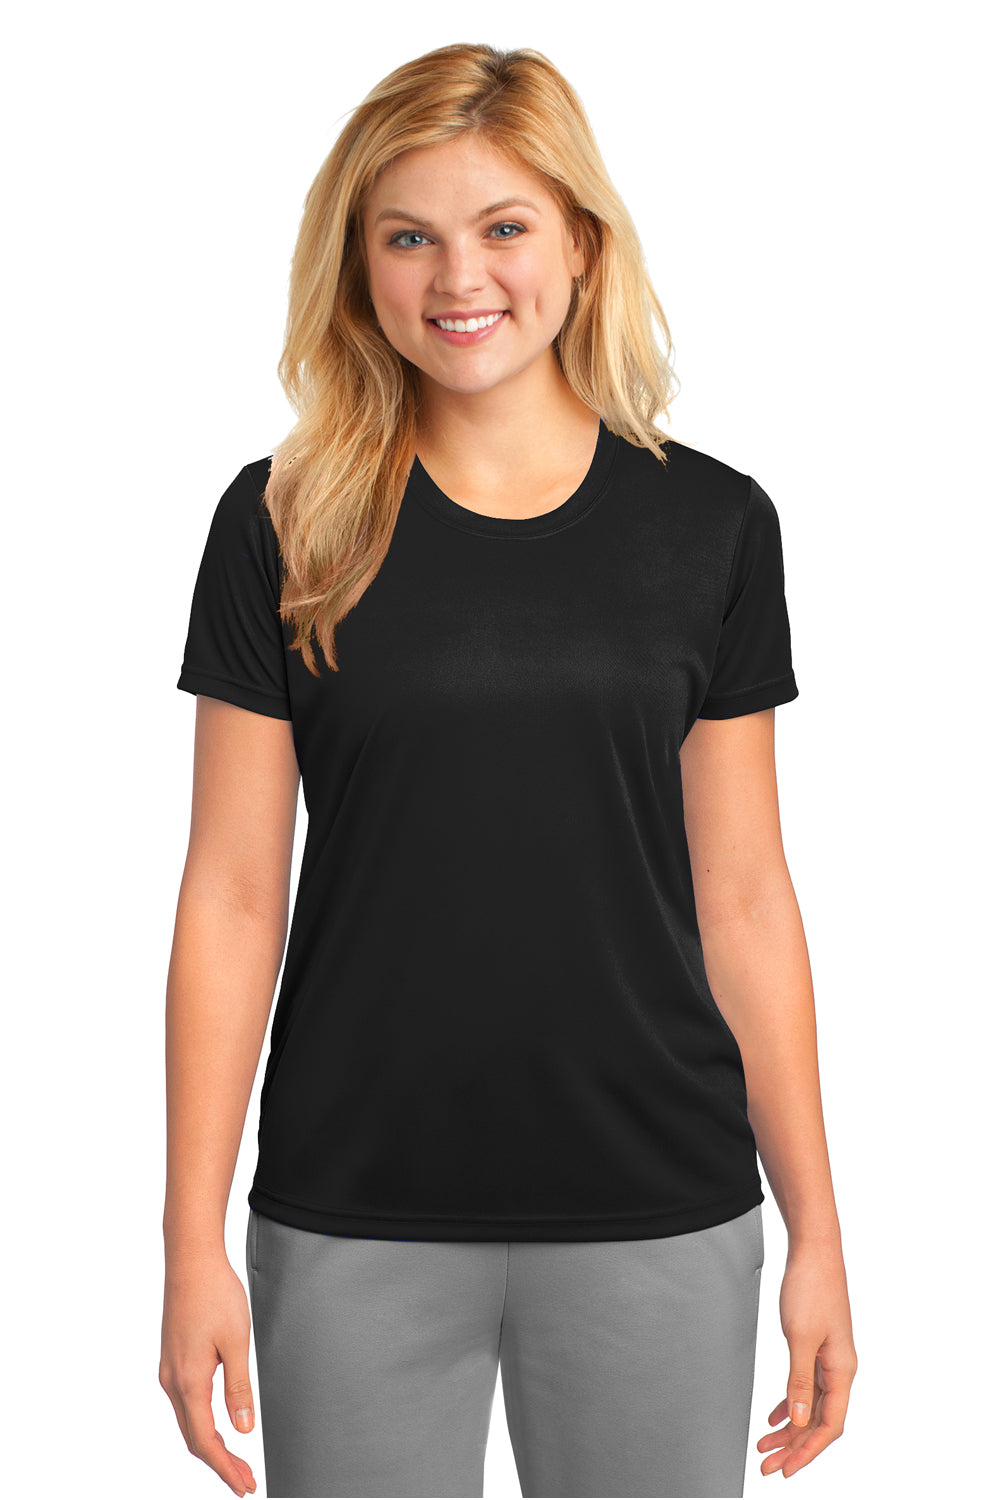 Port & Company LPC380 Womens Dry Zone Performance Moisture Wicking Short Sleeve Crewneck T-Shirt Black Front